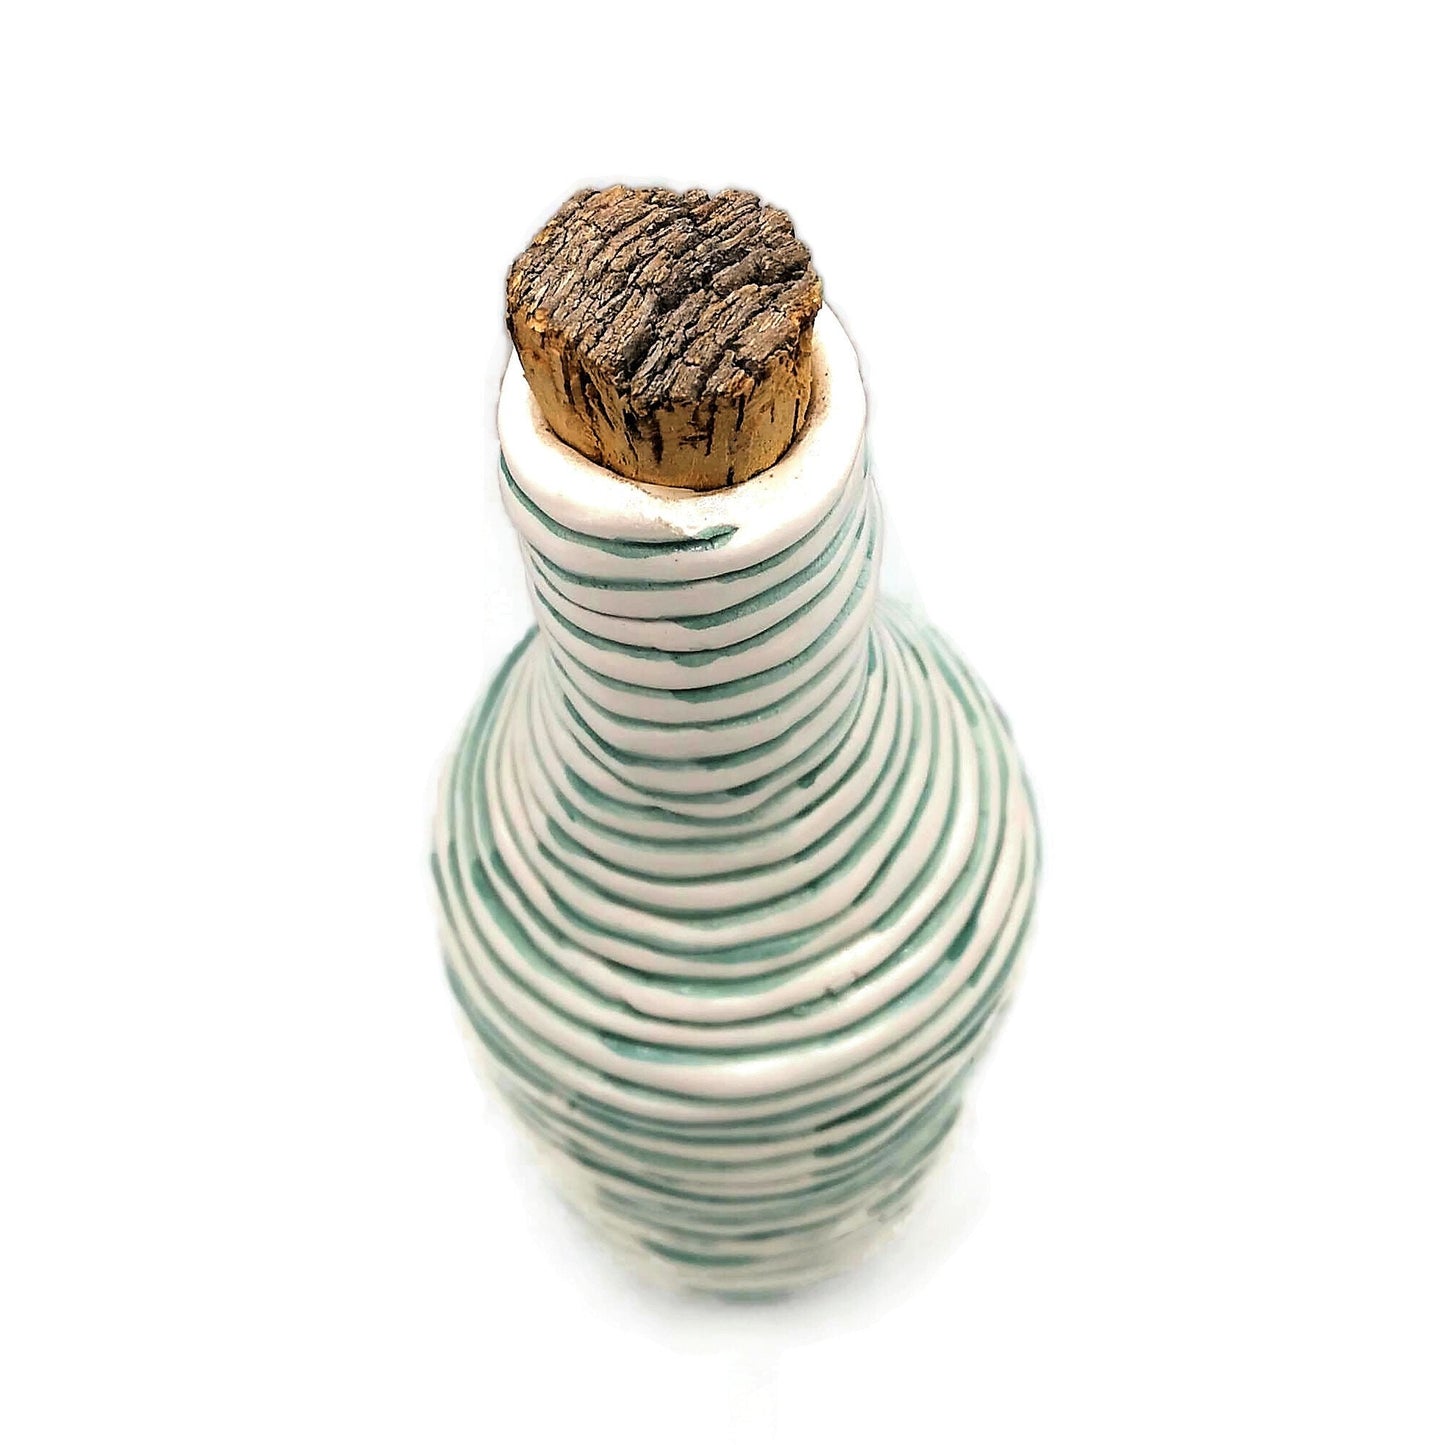 Handmade Ceramic Decorative Bottle With Natural Cork Stopper, White And Green Artisan Portuguese Pottery For Home Decor Unique Textured Vase - Ceramica Ana Rafael